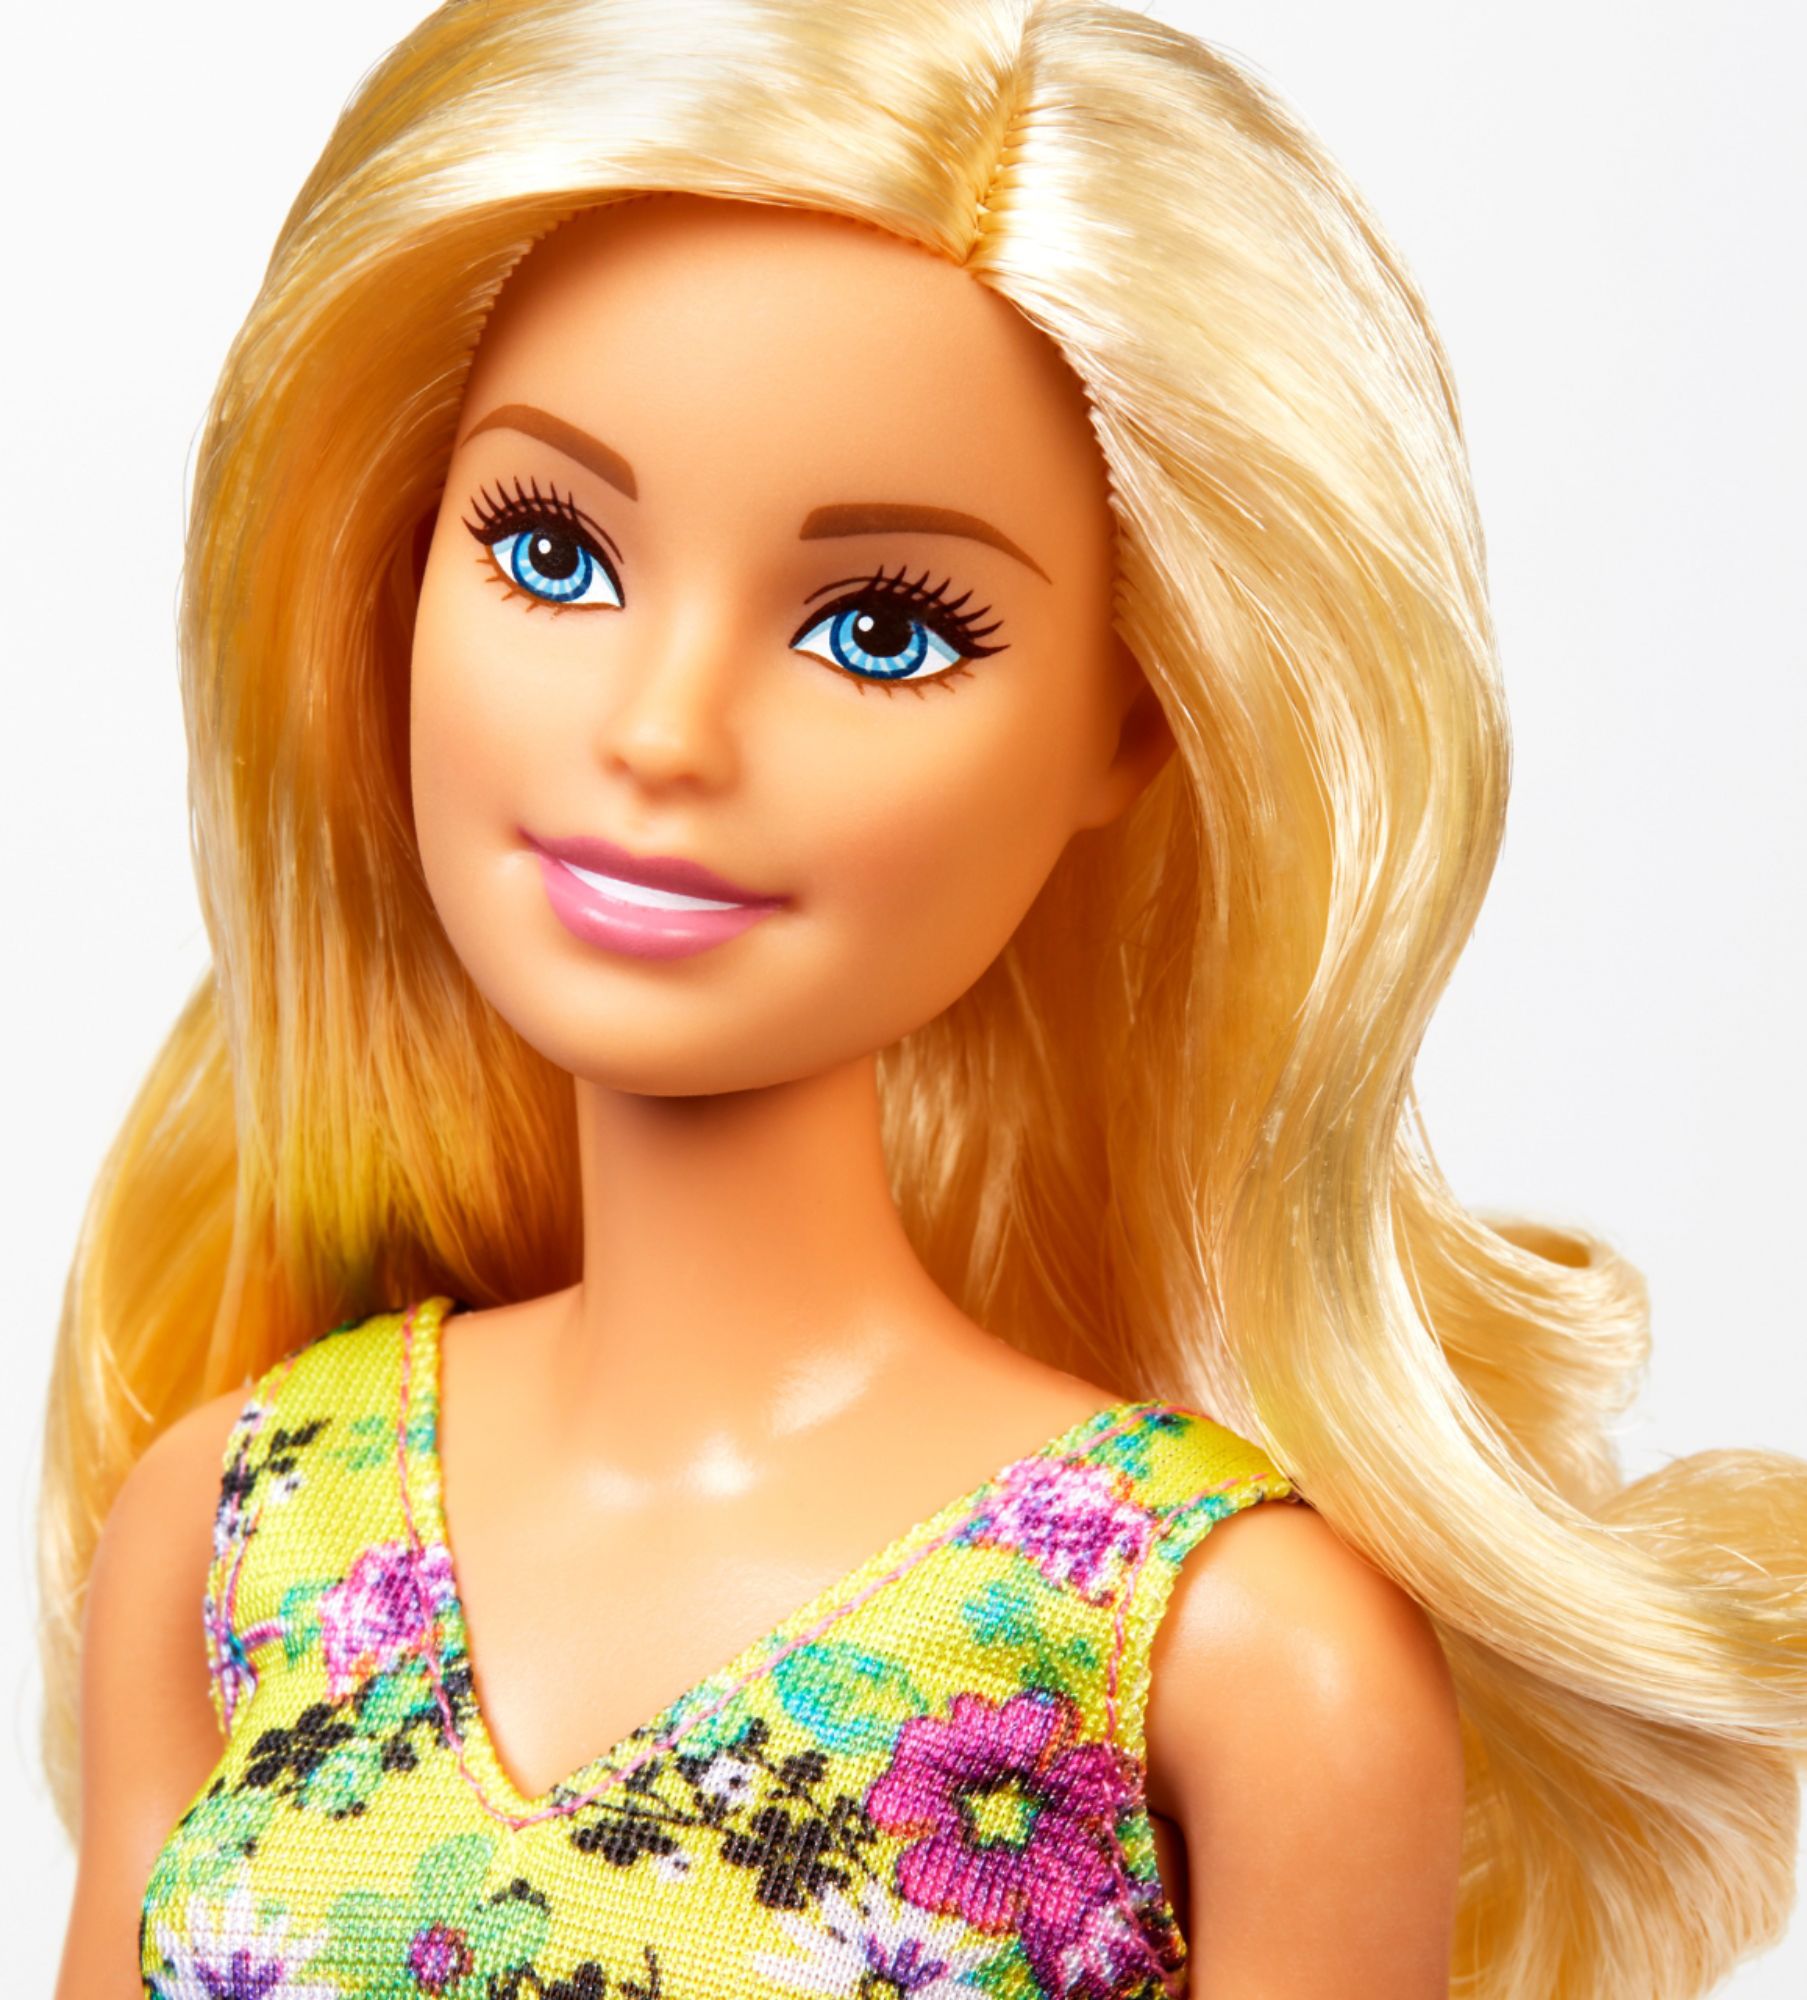 Best Buy: Barbie Fab Fashion Closet Clothing Set Pink DMT57